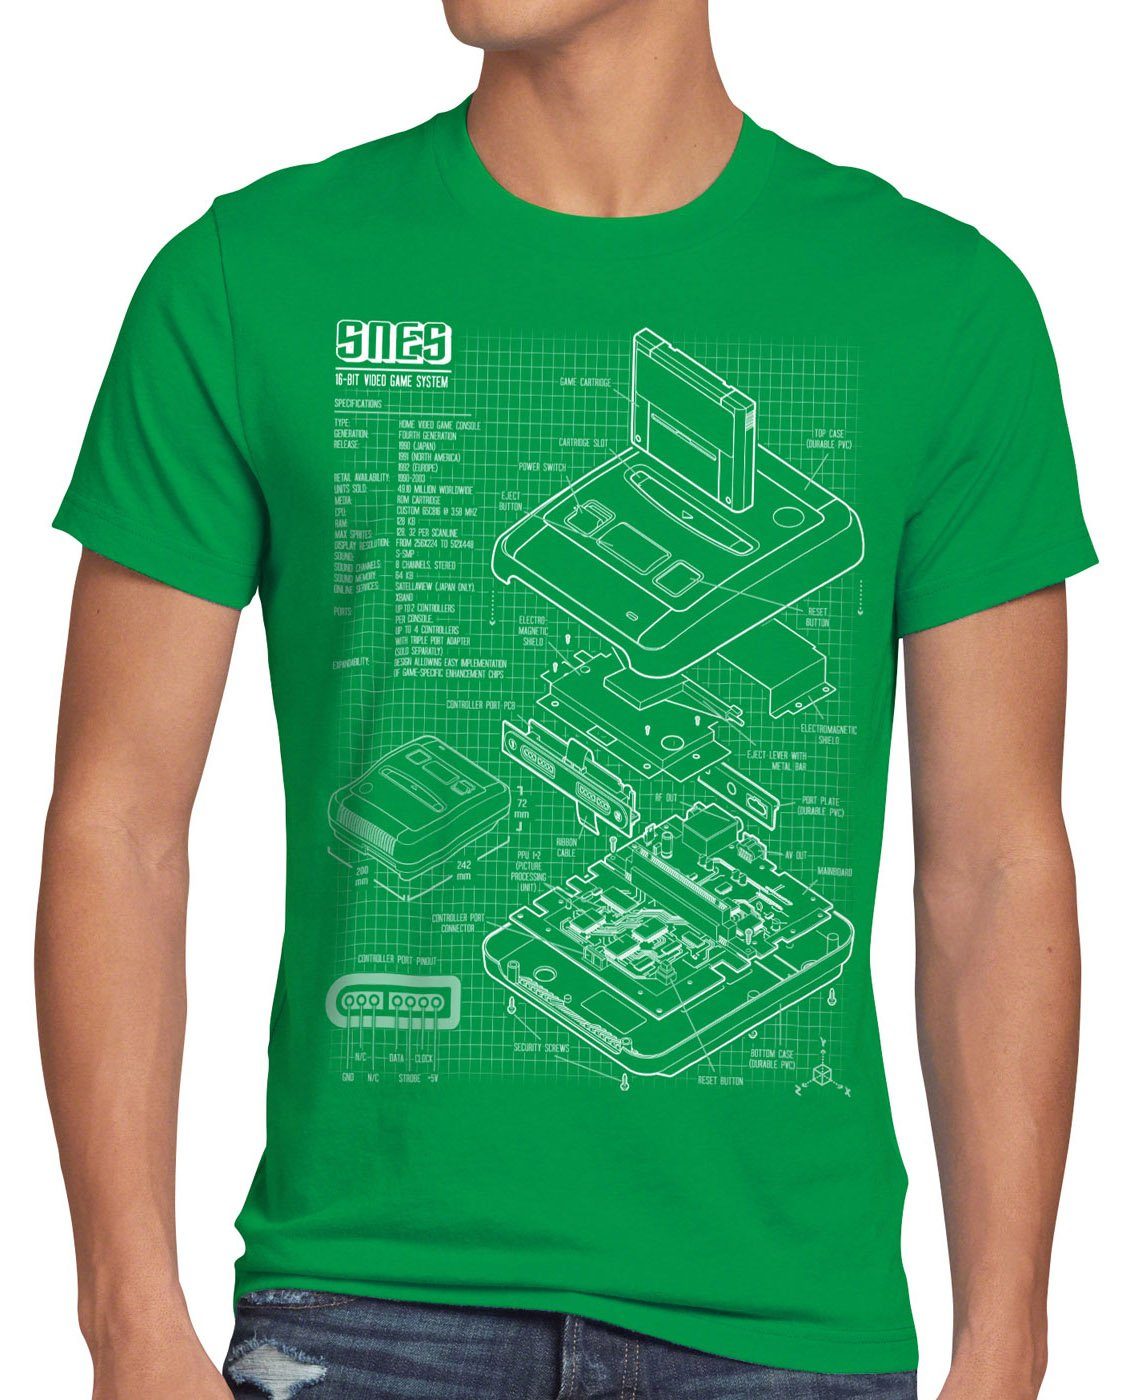 style3 Print-Shirt Herren T-Shirt SNES Blaupause 16-Bit Videospiel grün